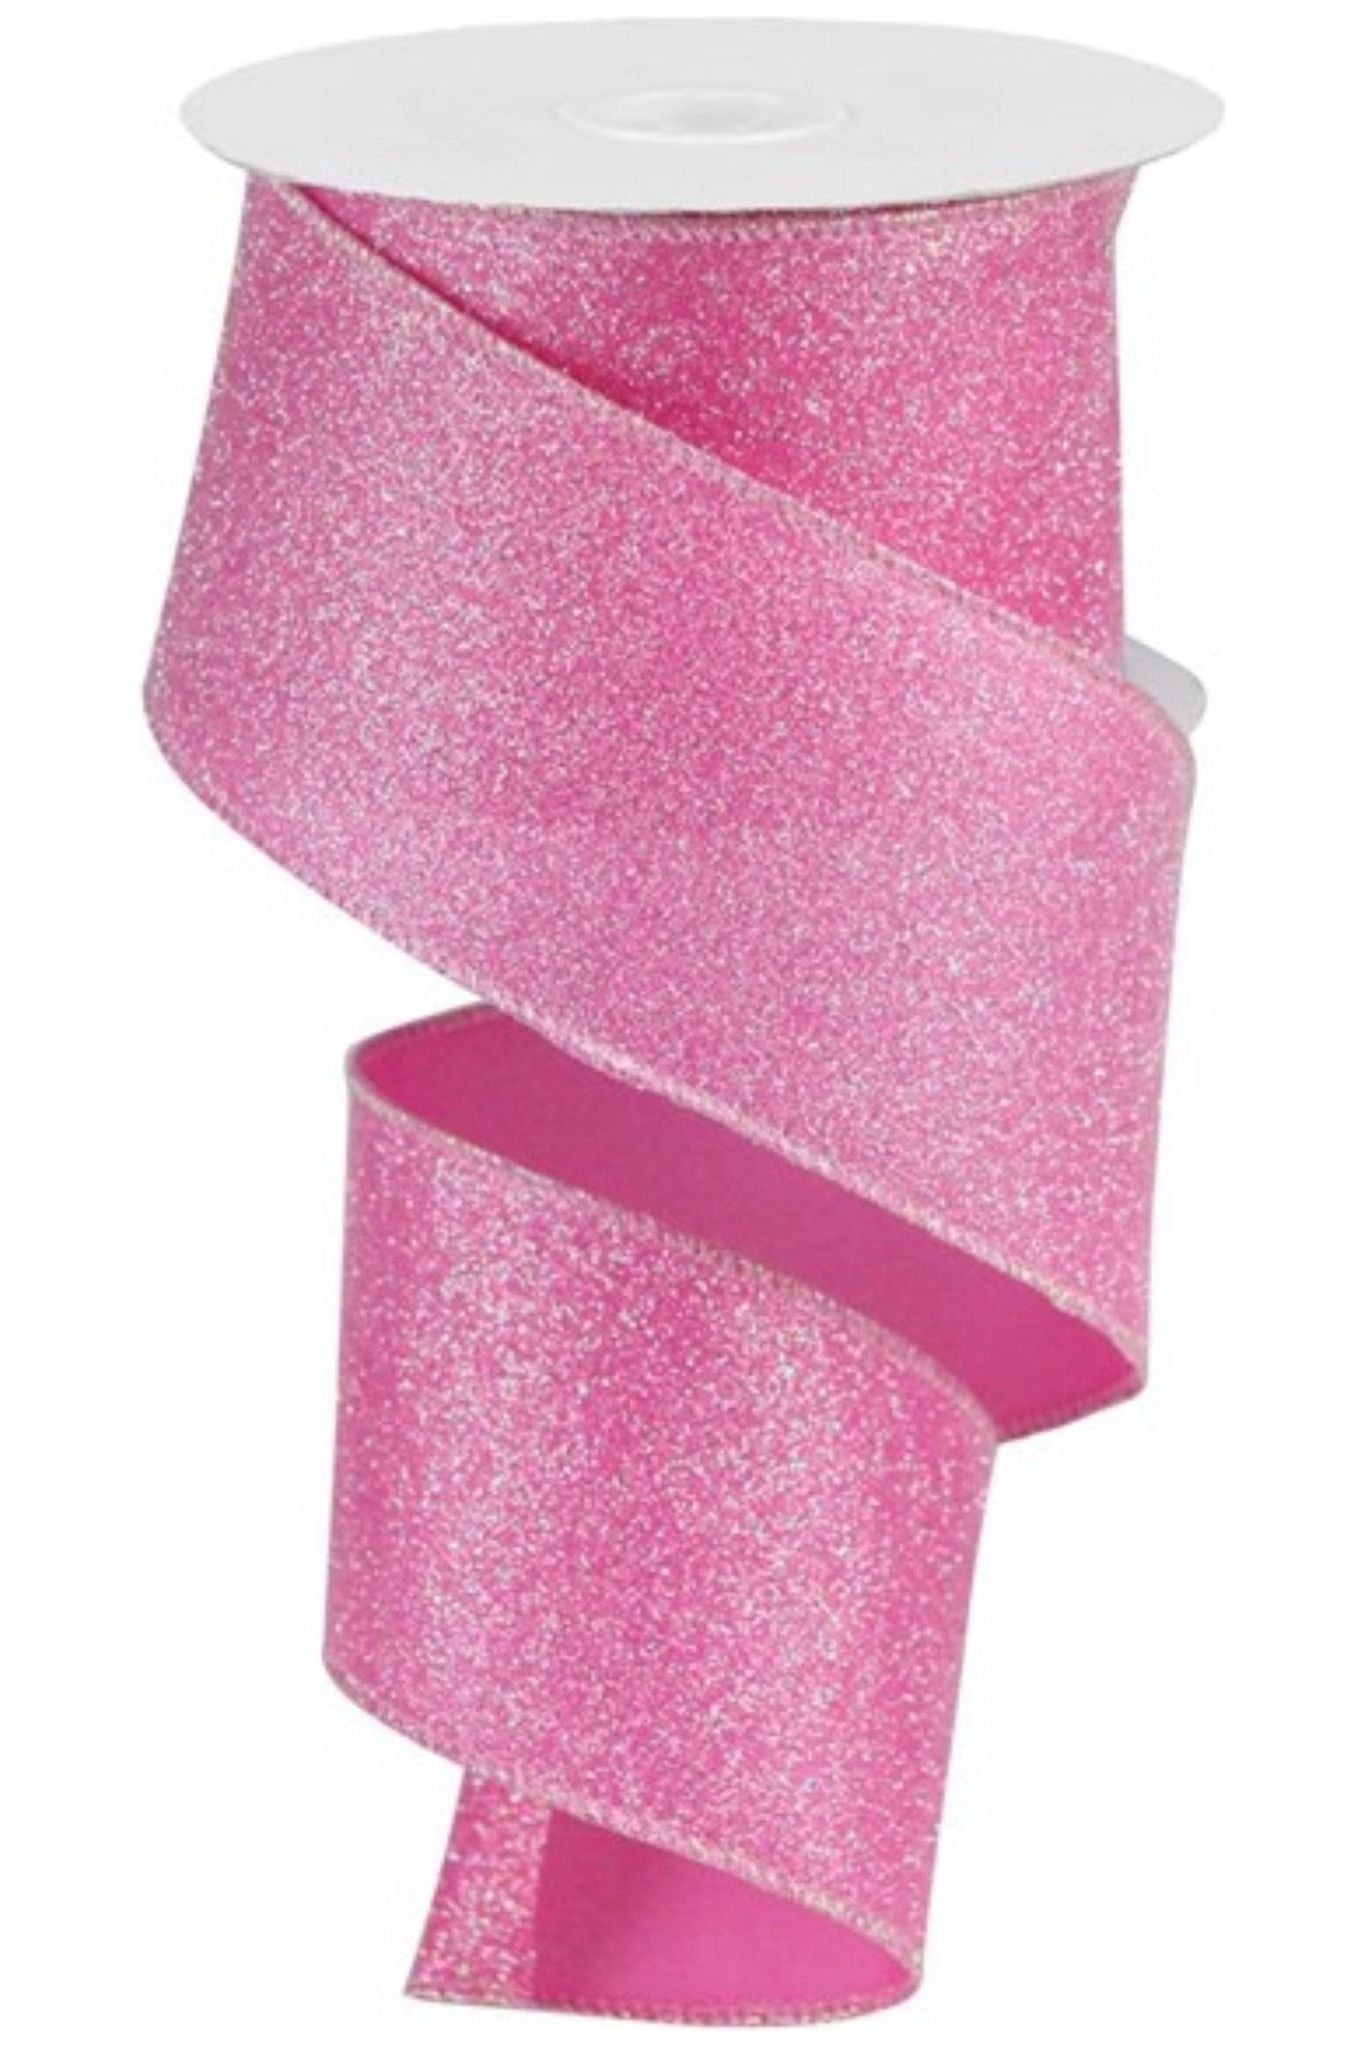 Shop For 2.5" Iridescent Glitter Ribbon: Pink (10 Yards) RGA181722